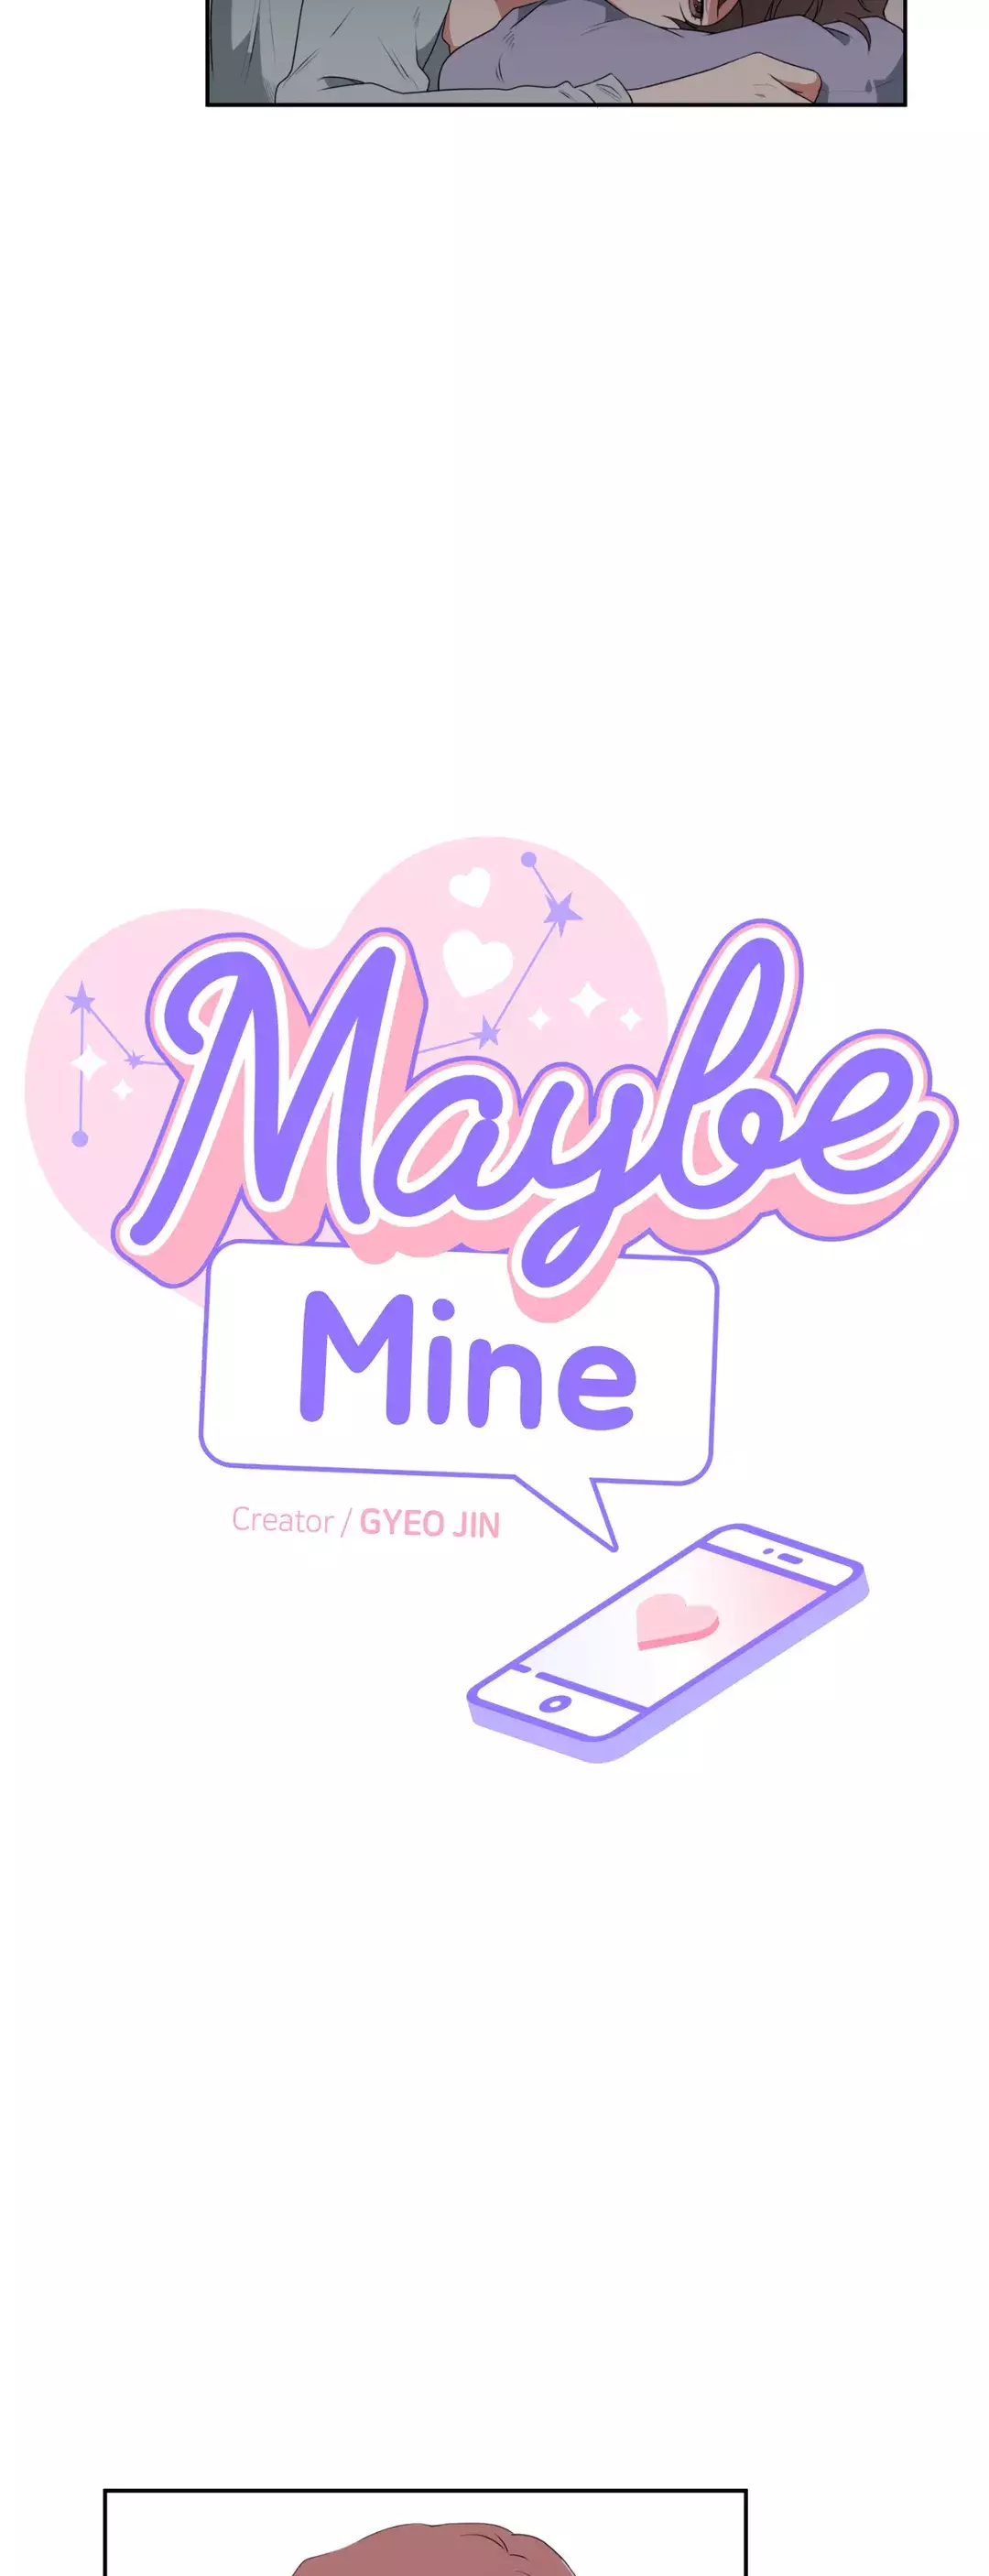 Maybe Mine - GYEO JIN - Webtoons - Lezhin Comics